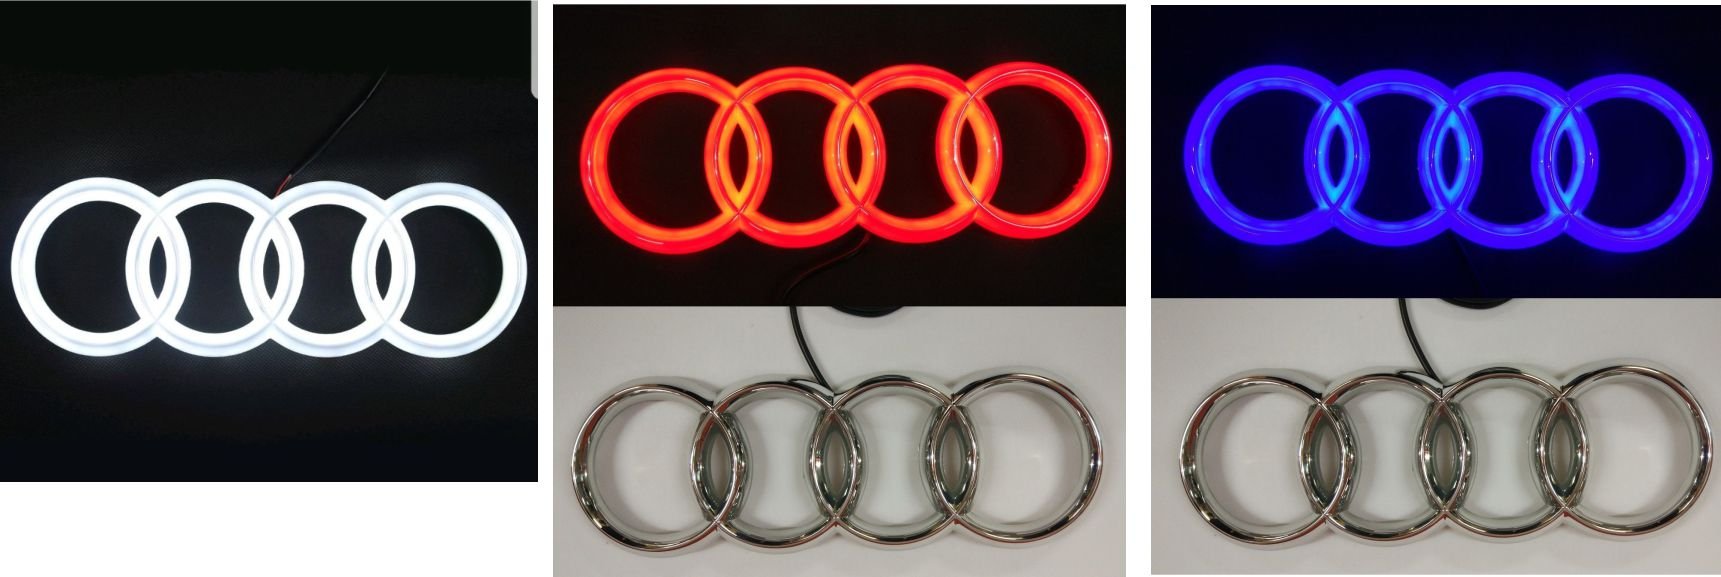 Illuminated Audi Rings Various